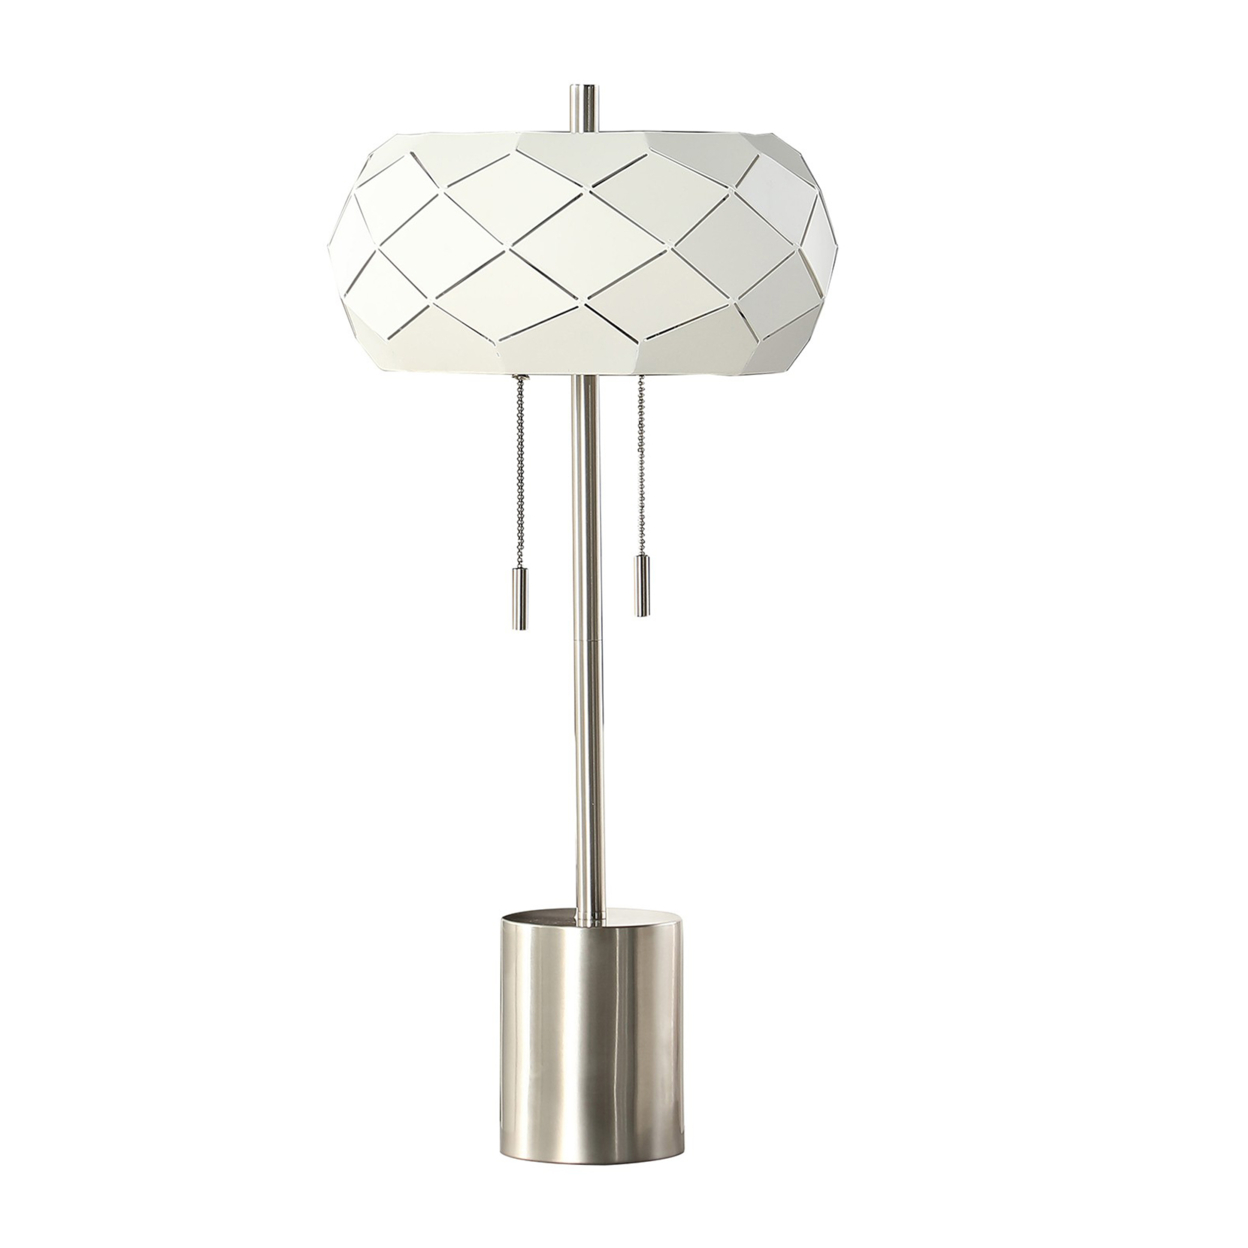 28 Inch Accent Table Lamp, Geometric Drum Shade, Metal Base, White, Silver- Saltoro Sherpi